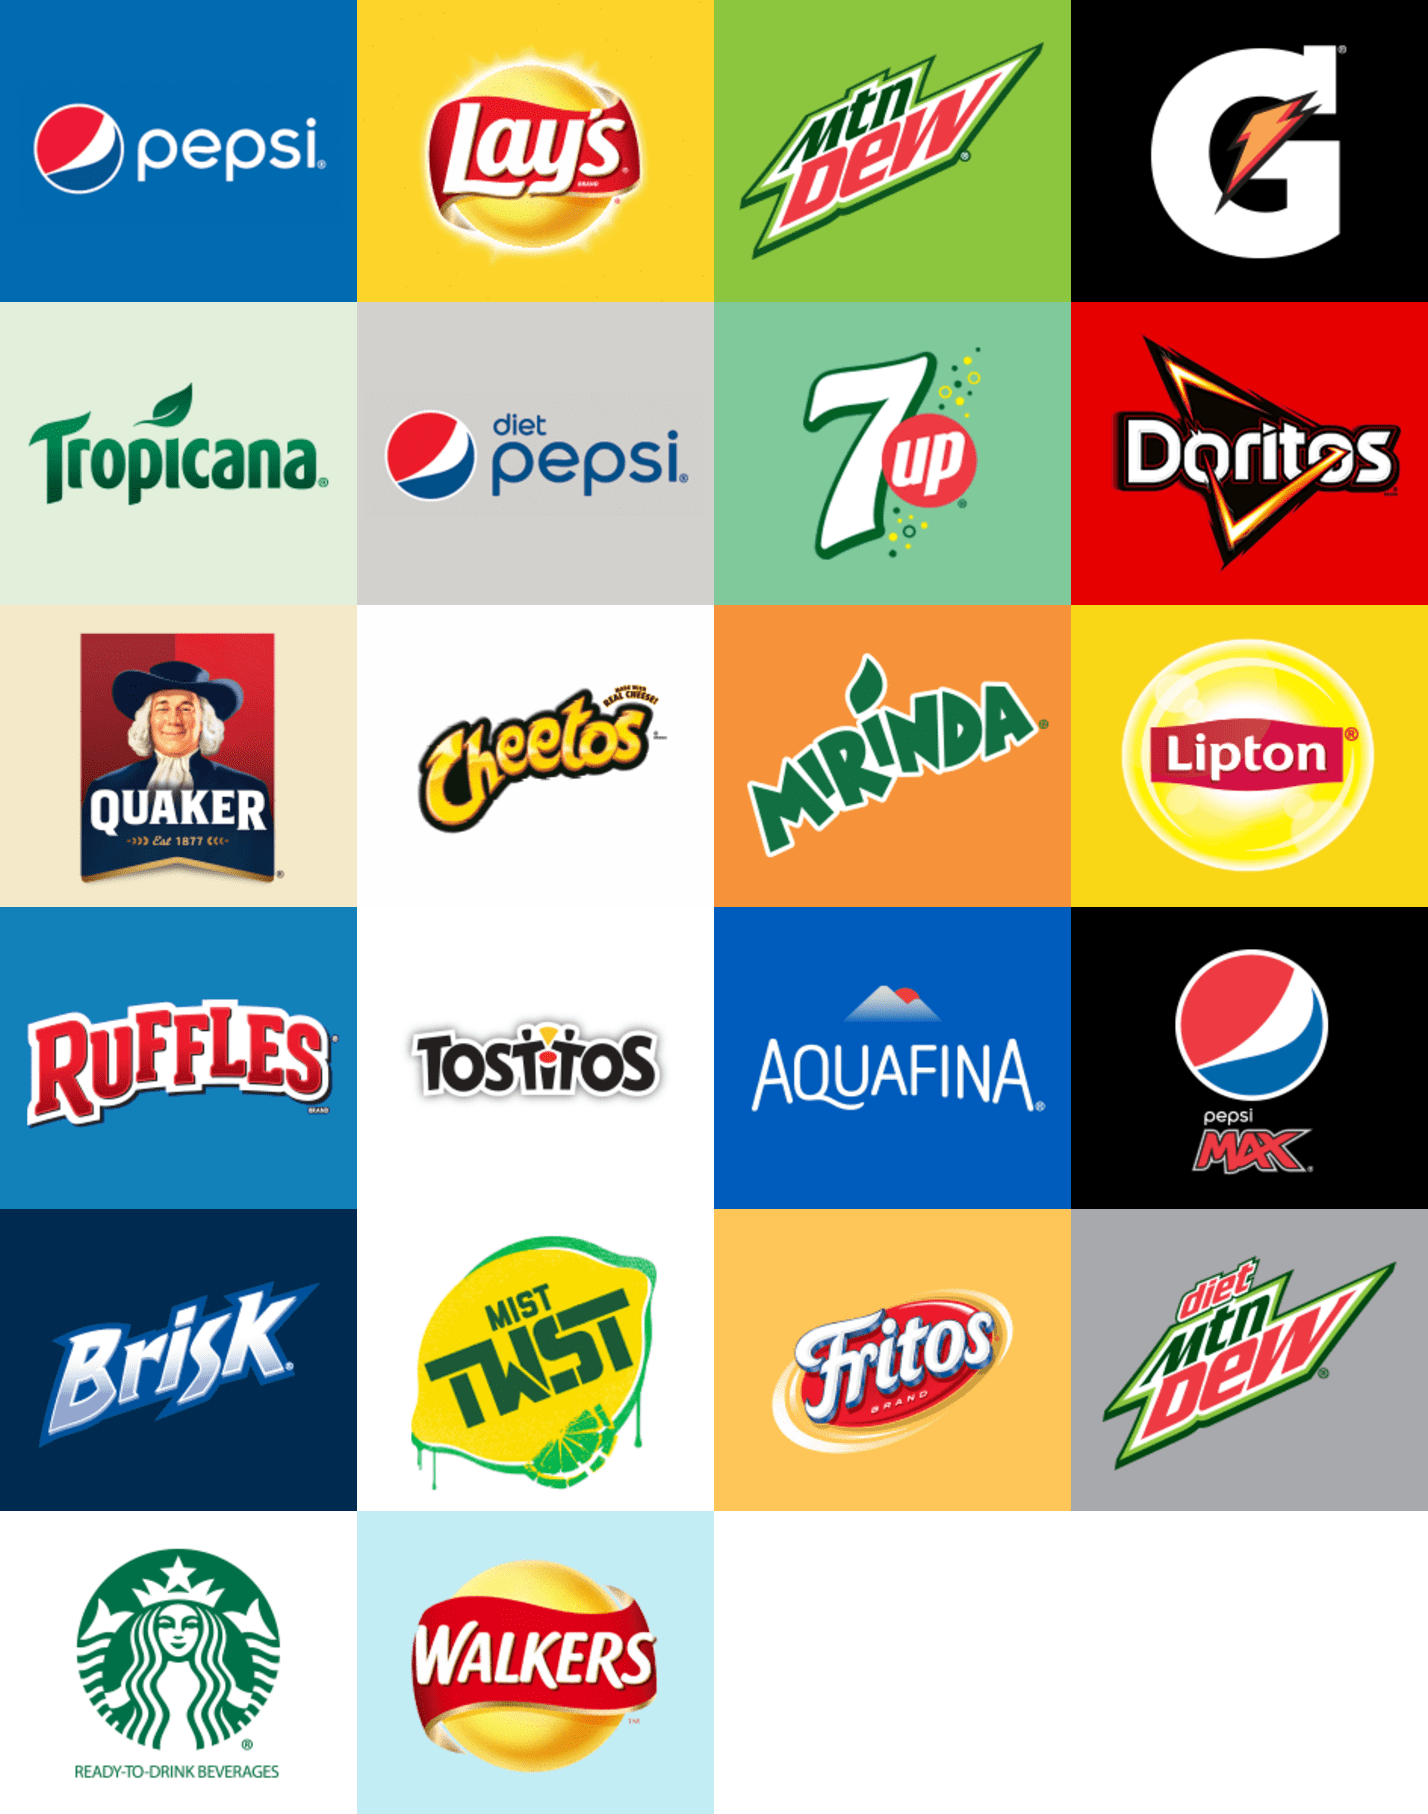 22 PepsiCo brands earning more than $1 billion each.